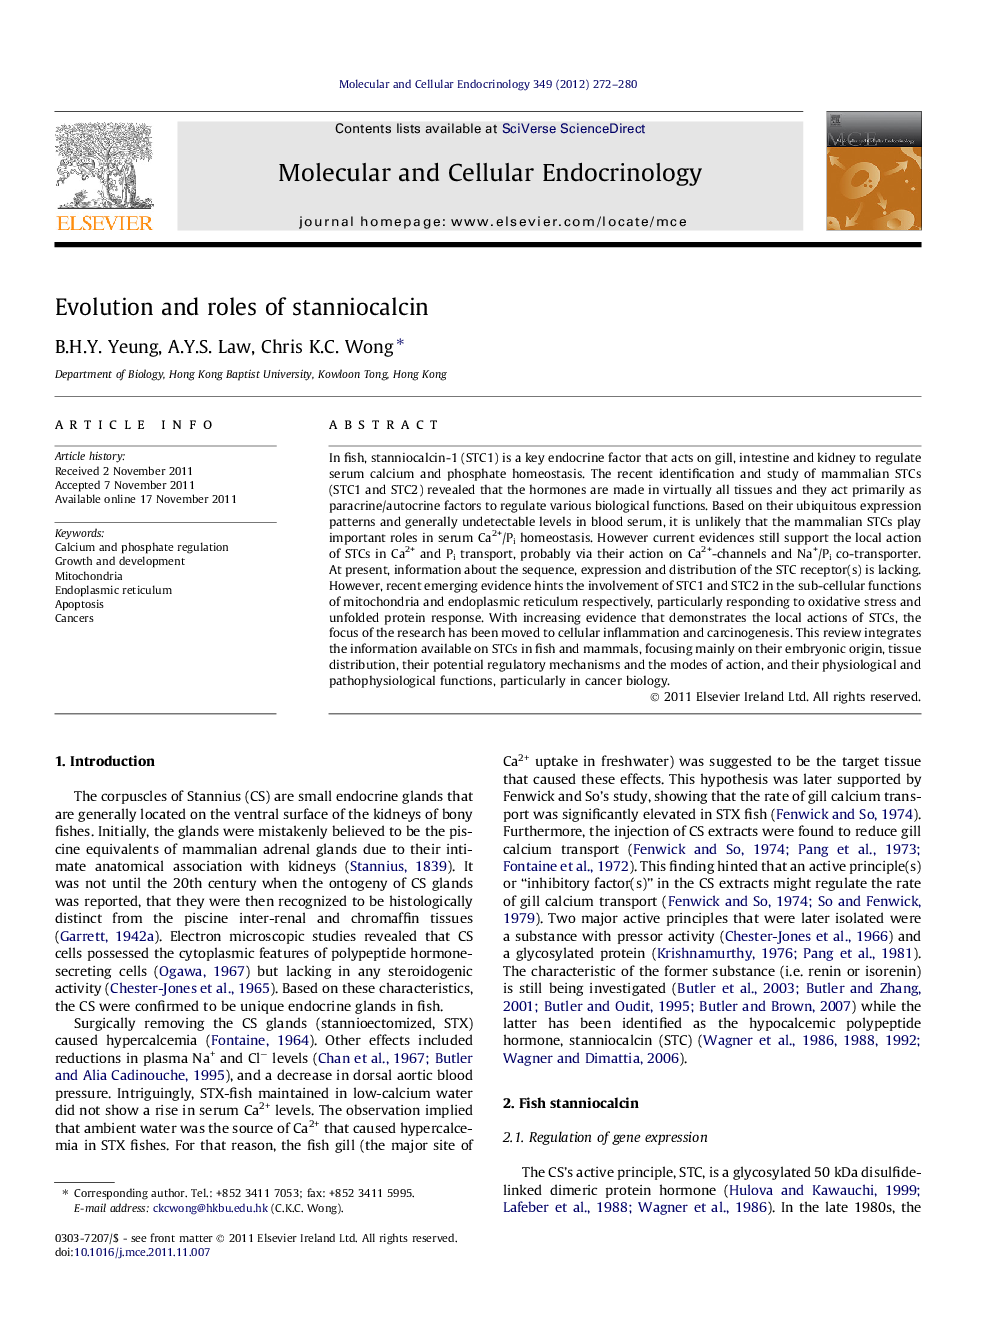 Evolution and roles of stanniocalcin